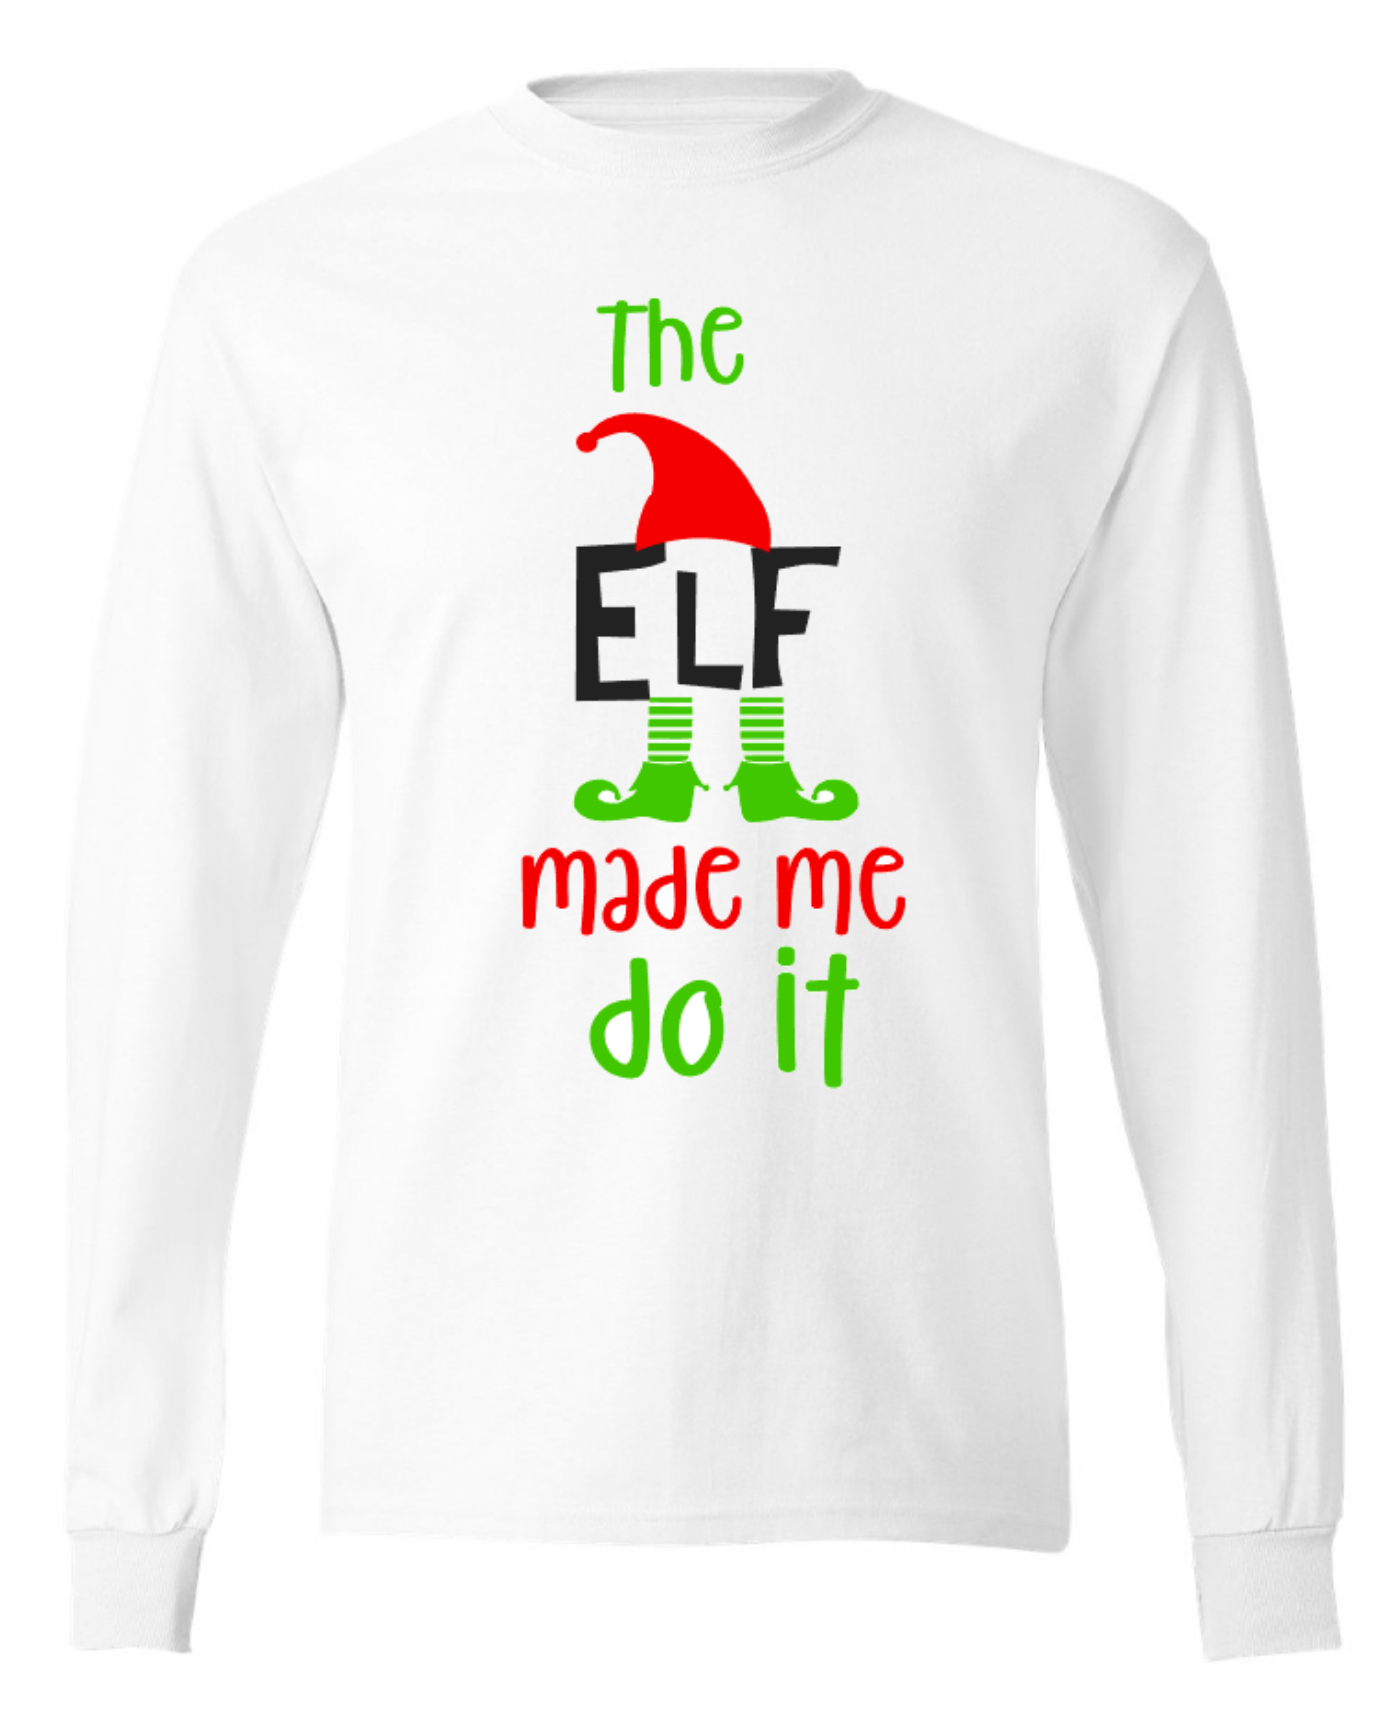 The Elf Made me Do it Tee